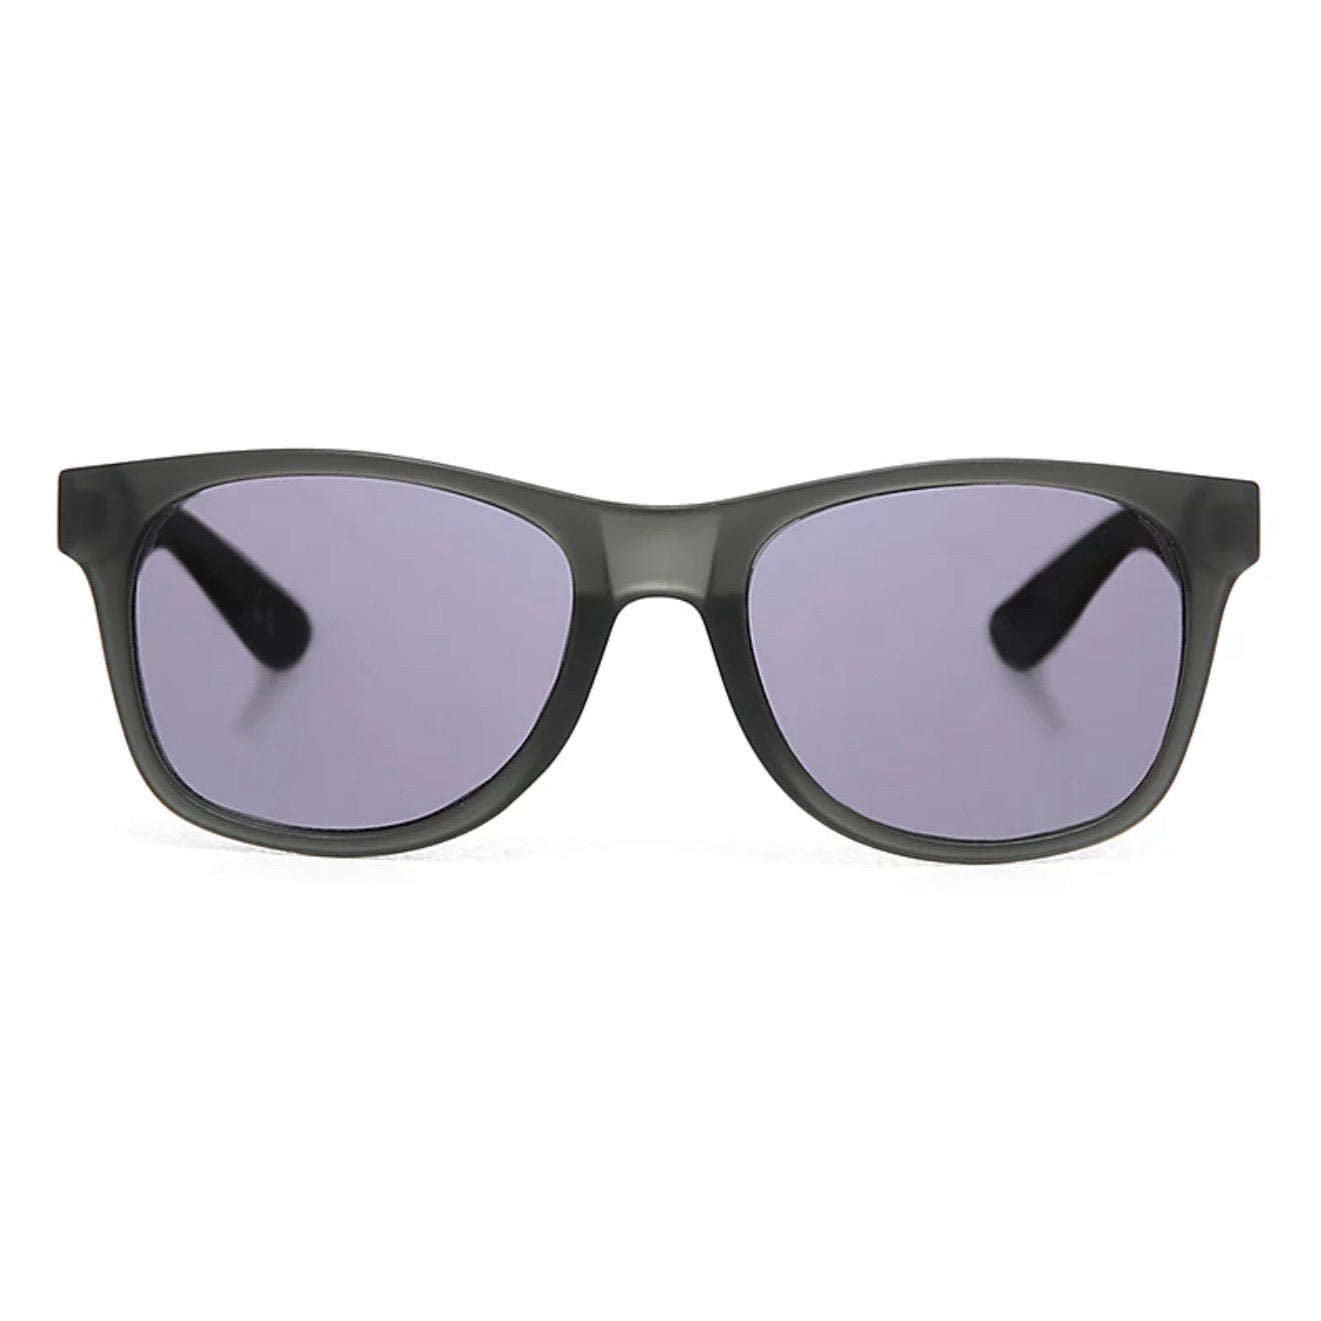 Vans Adult Sunglasses Spicoli Black Accessories ONE SIZE / Black